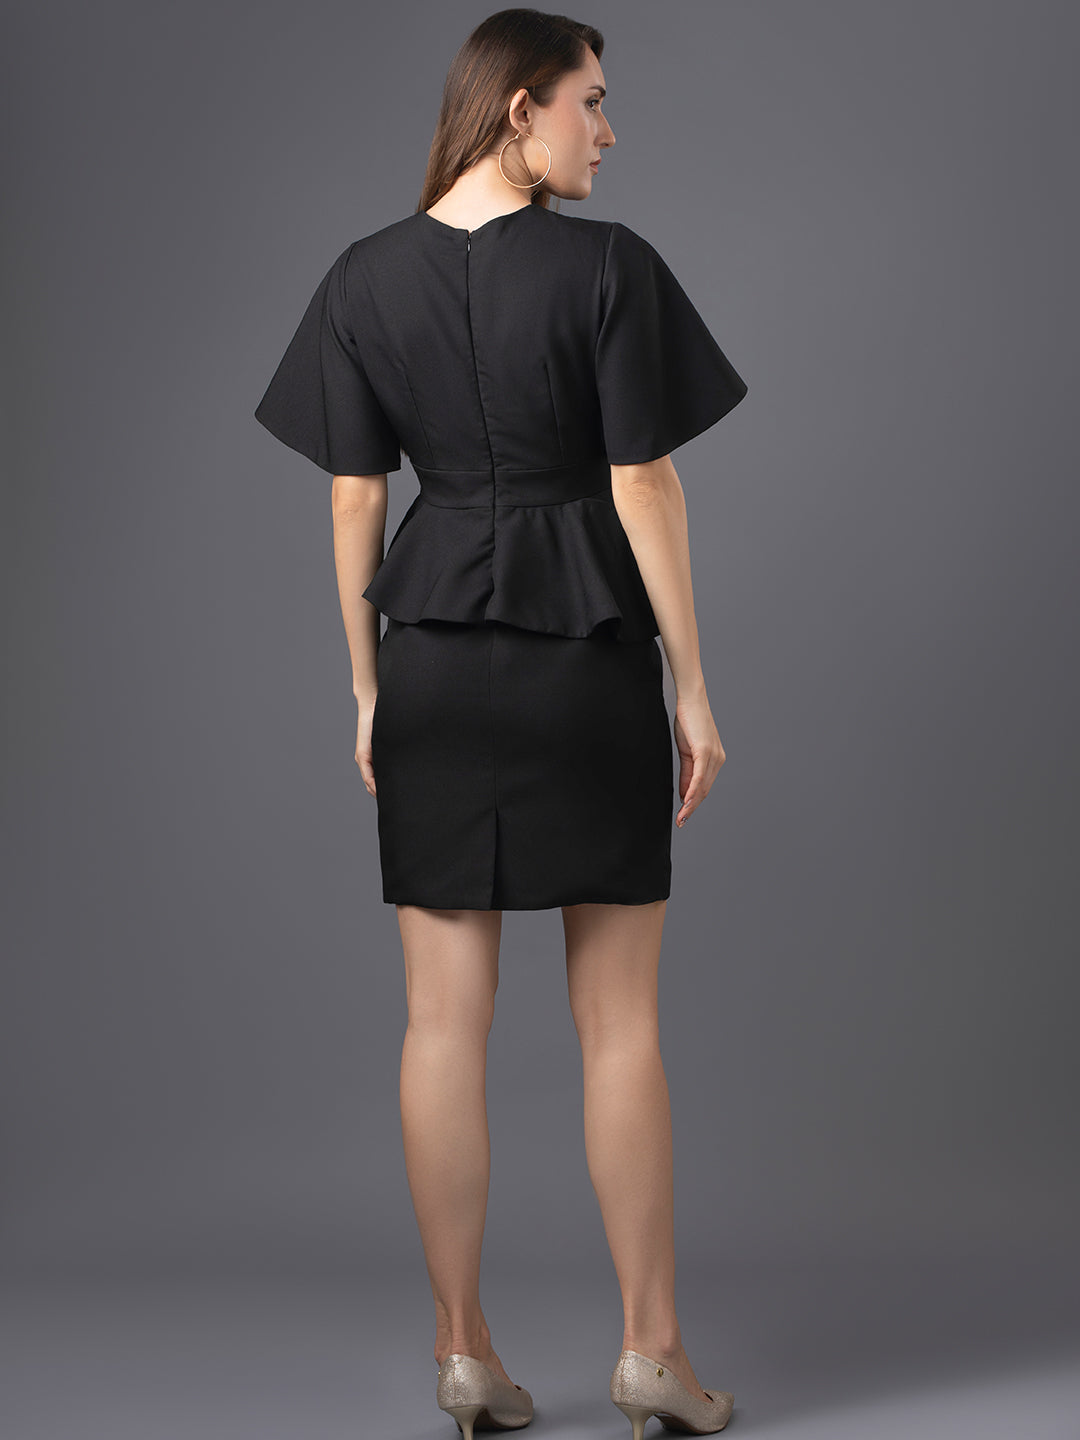 Madison Crepe Dress - Black